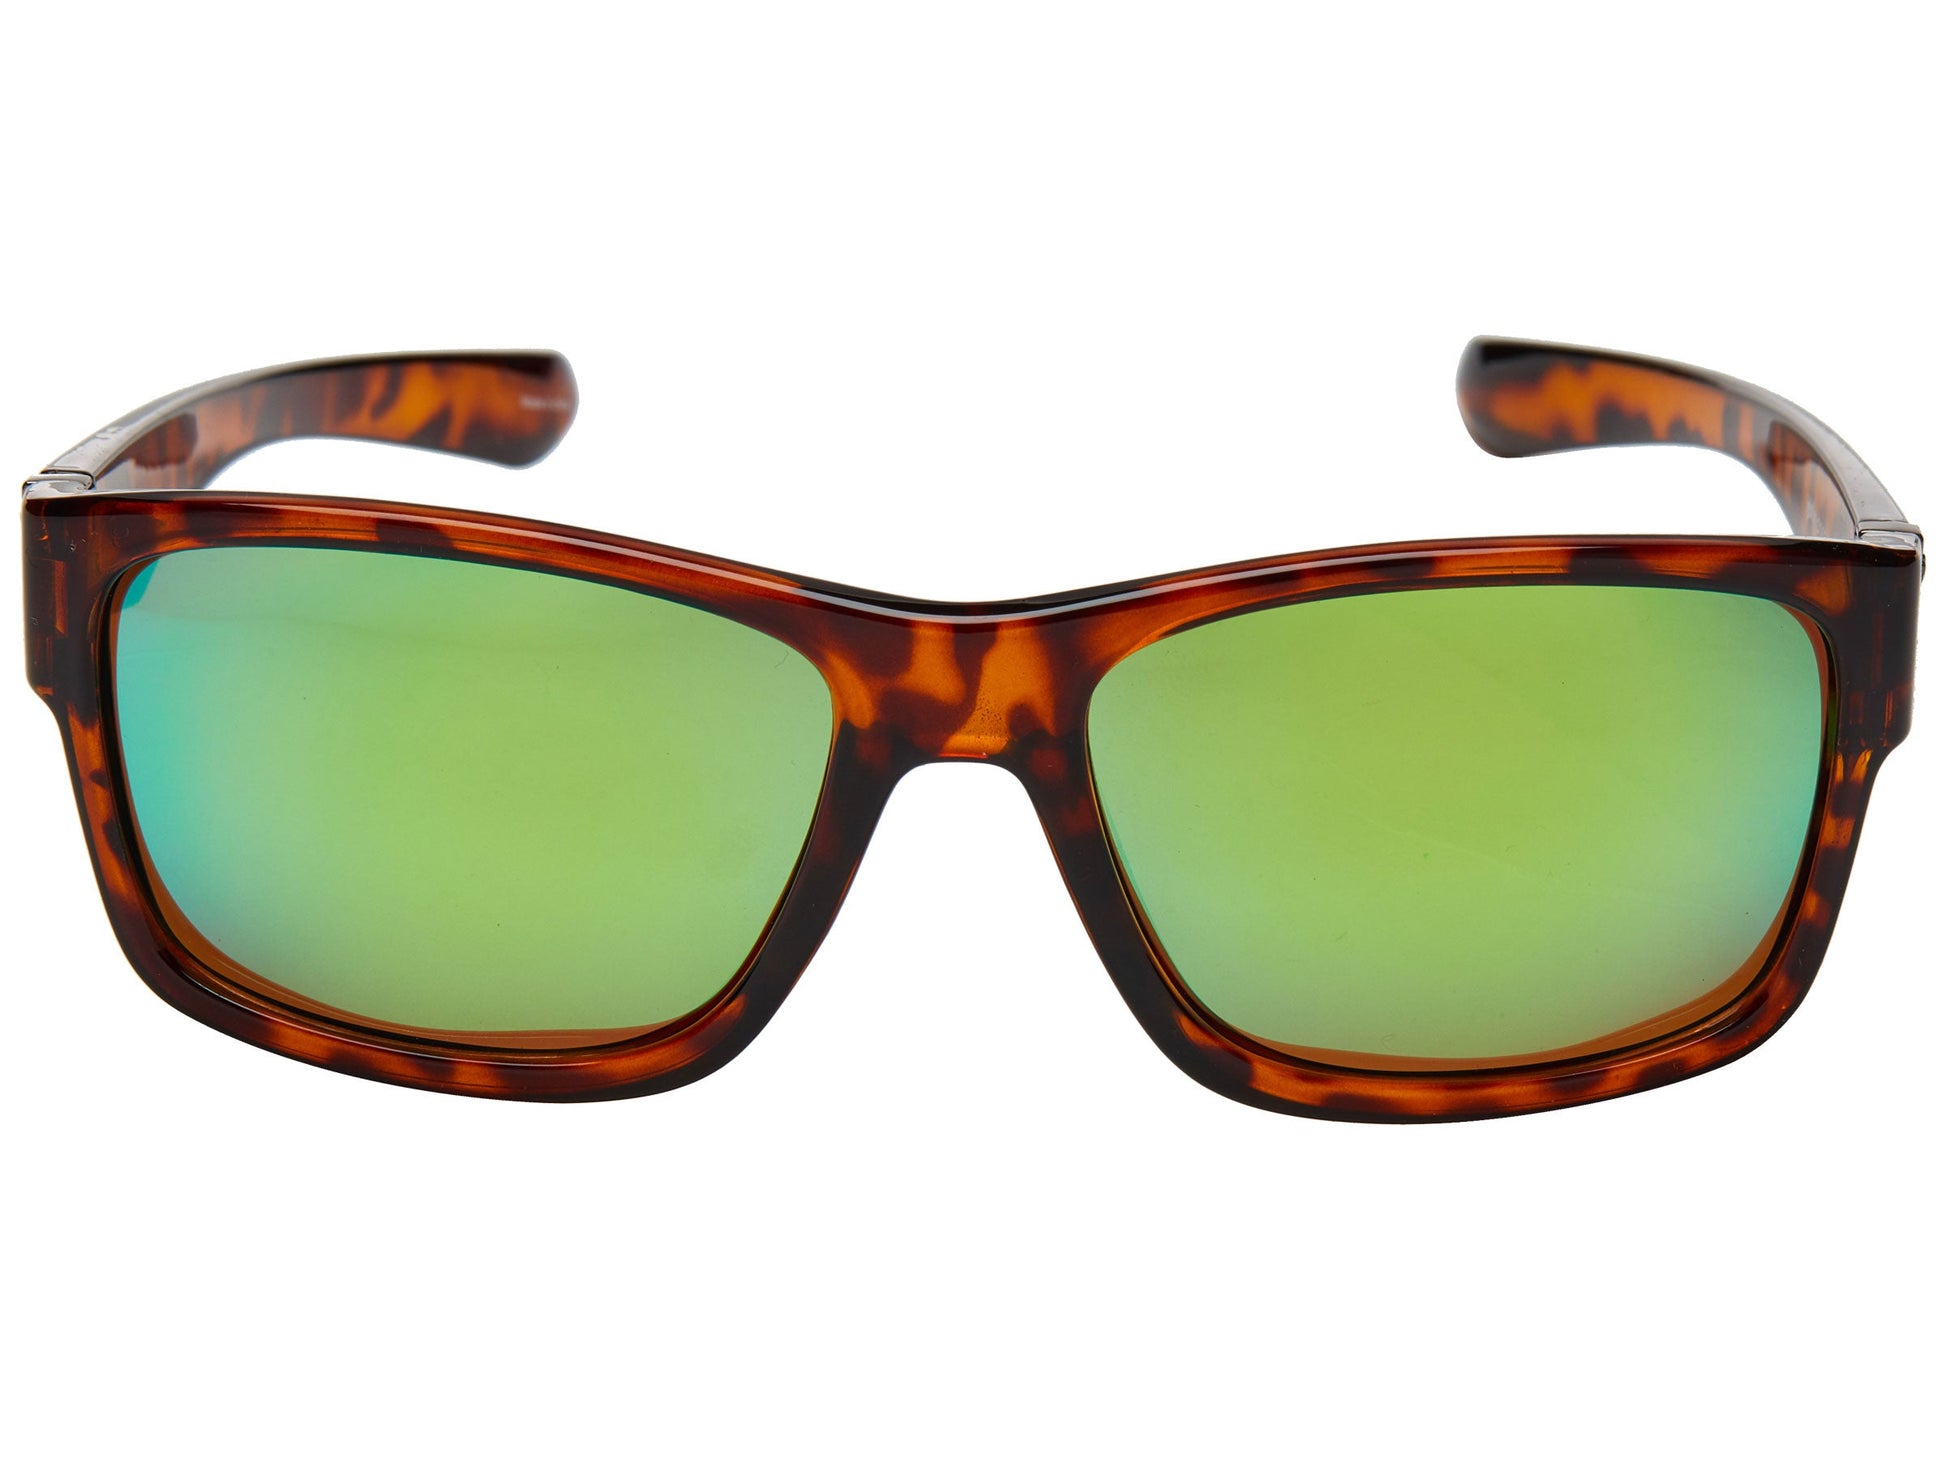 STRIKEKIN Pro Catawba Polarized Fishing Sunglasses